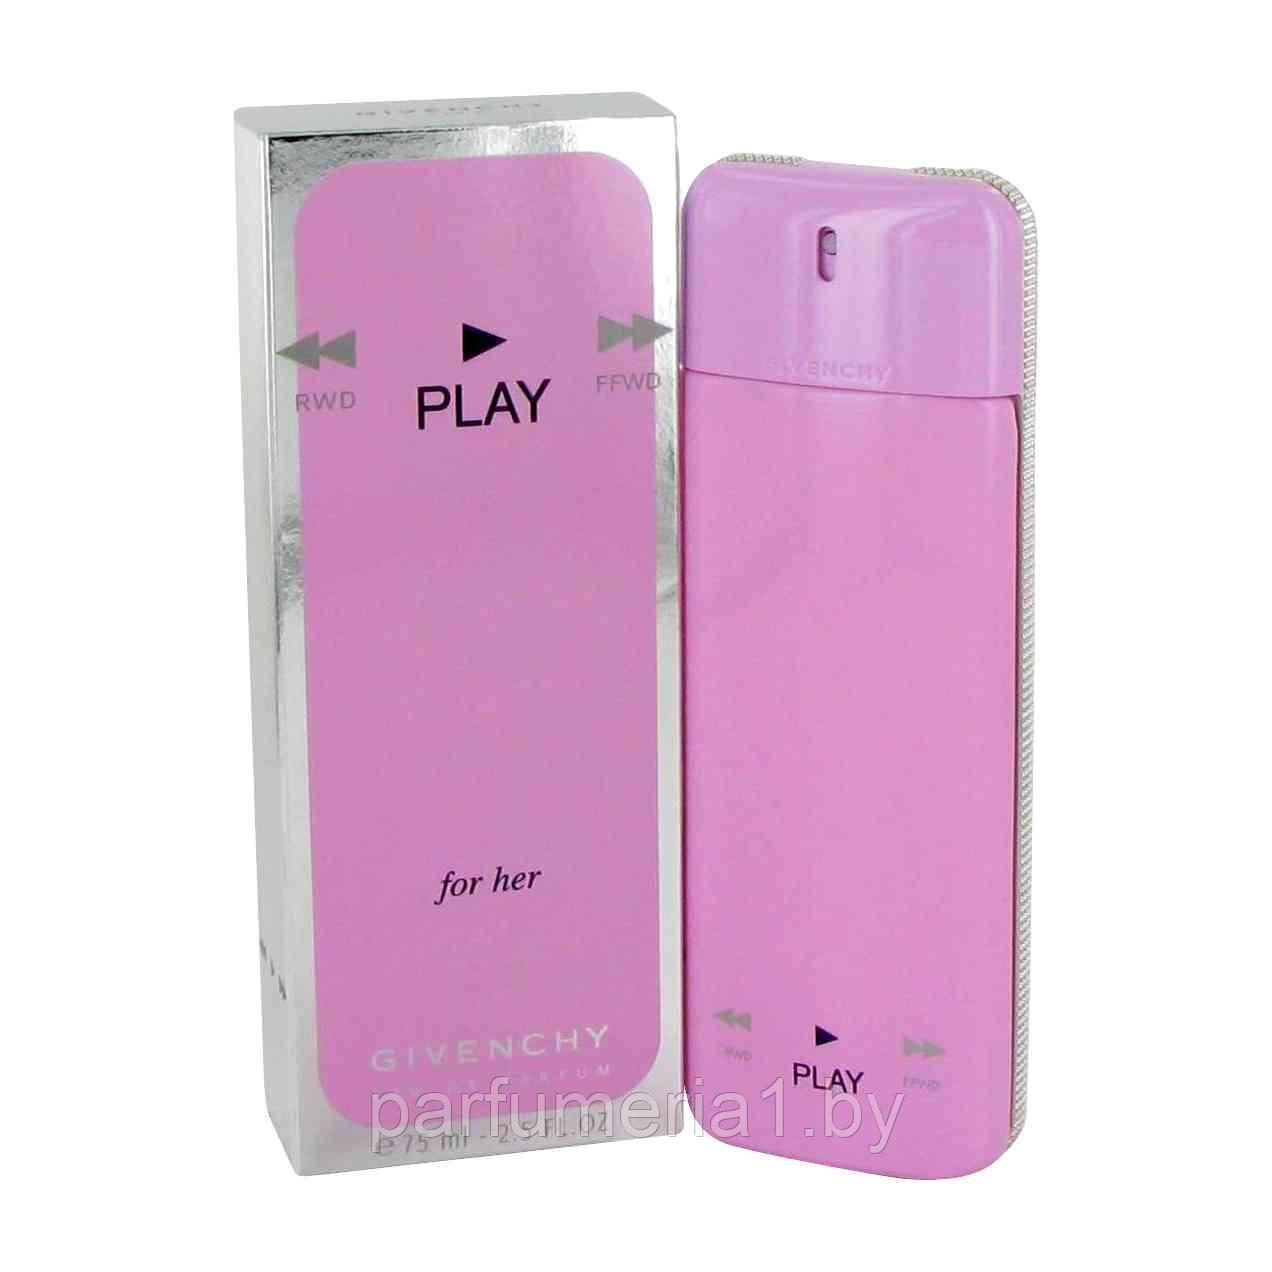 Туалетная вода play. Givenchy Play for her 75 ml EDP. Givenchy Play Eau de Parfum for women/75ml. Духи живанши плей женские розовые. Givenchy Play for her.